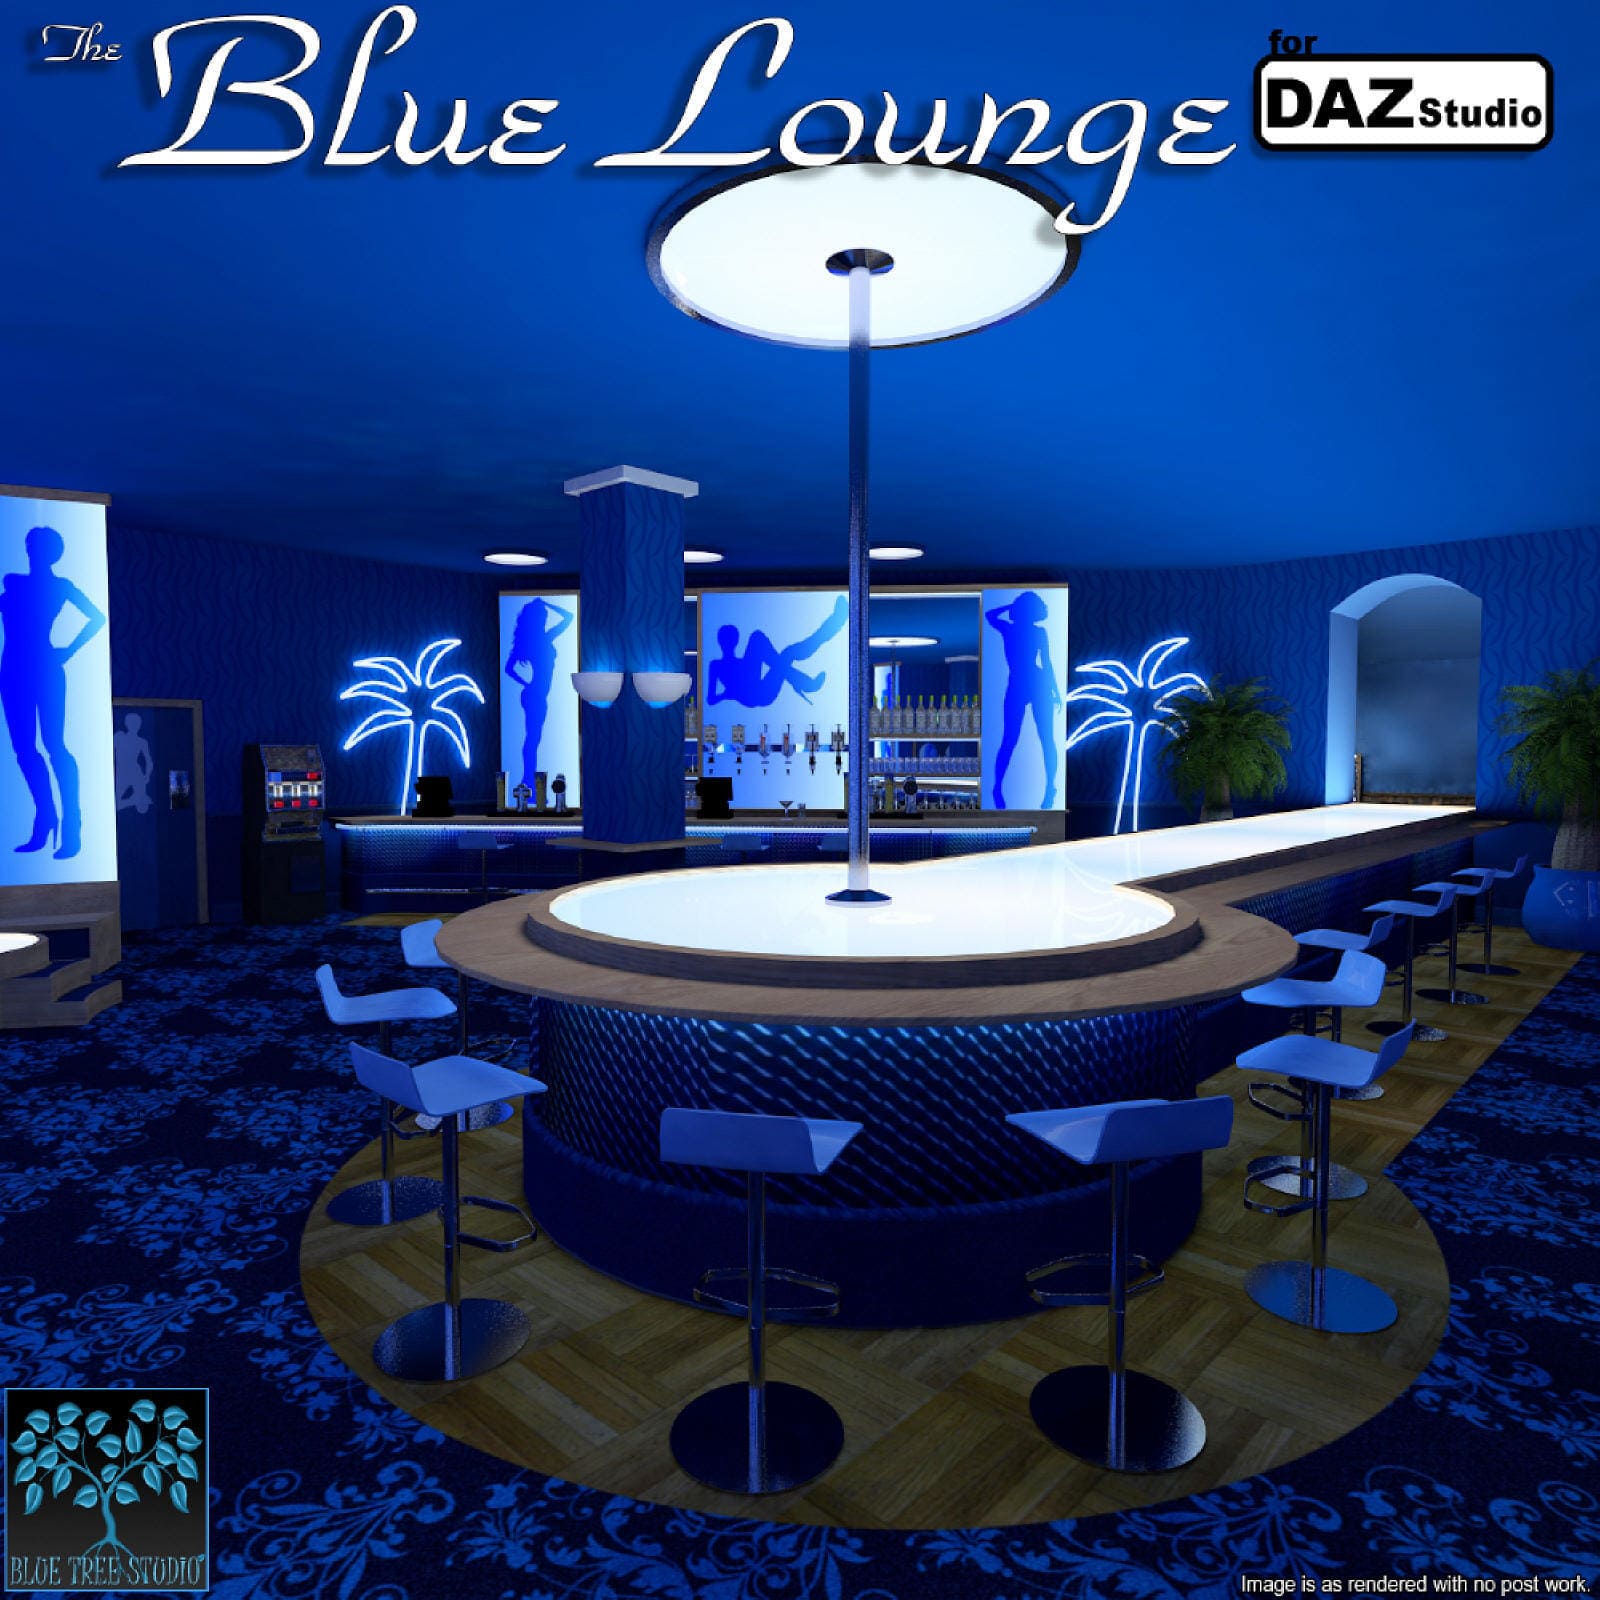 The Blue Lounge for Daz_DAZ3DDL